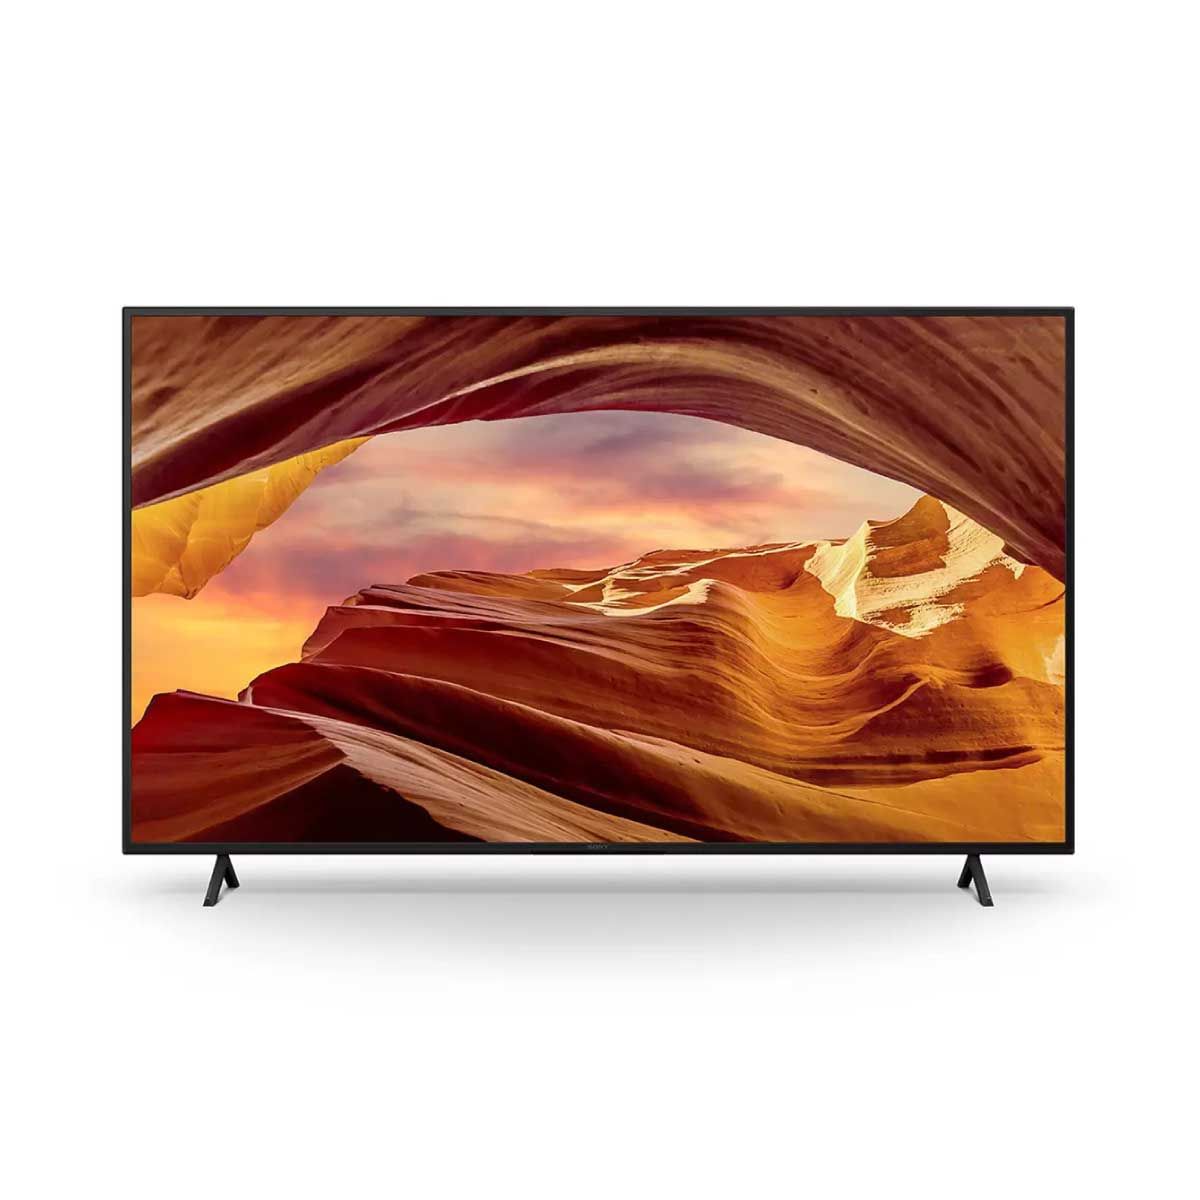 SONY Bravia LED Google TV 4K รุ่น KD-65X77L สมาร์ททีวี Google TV 4K ขนาด 65 นิ้ว ปี2023